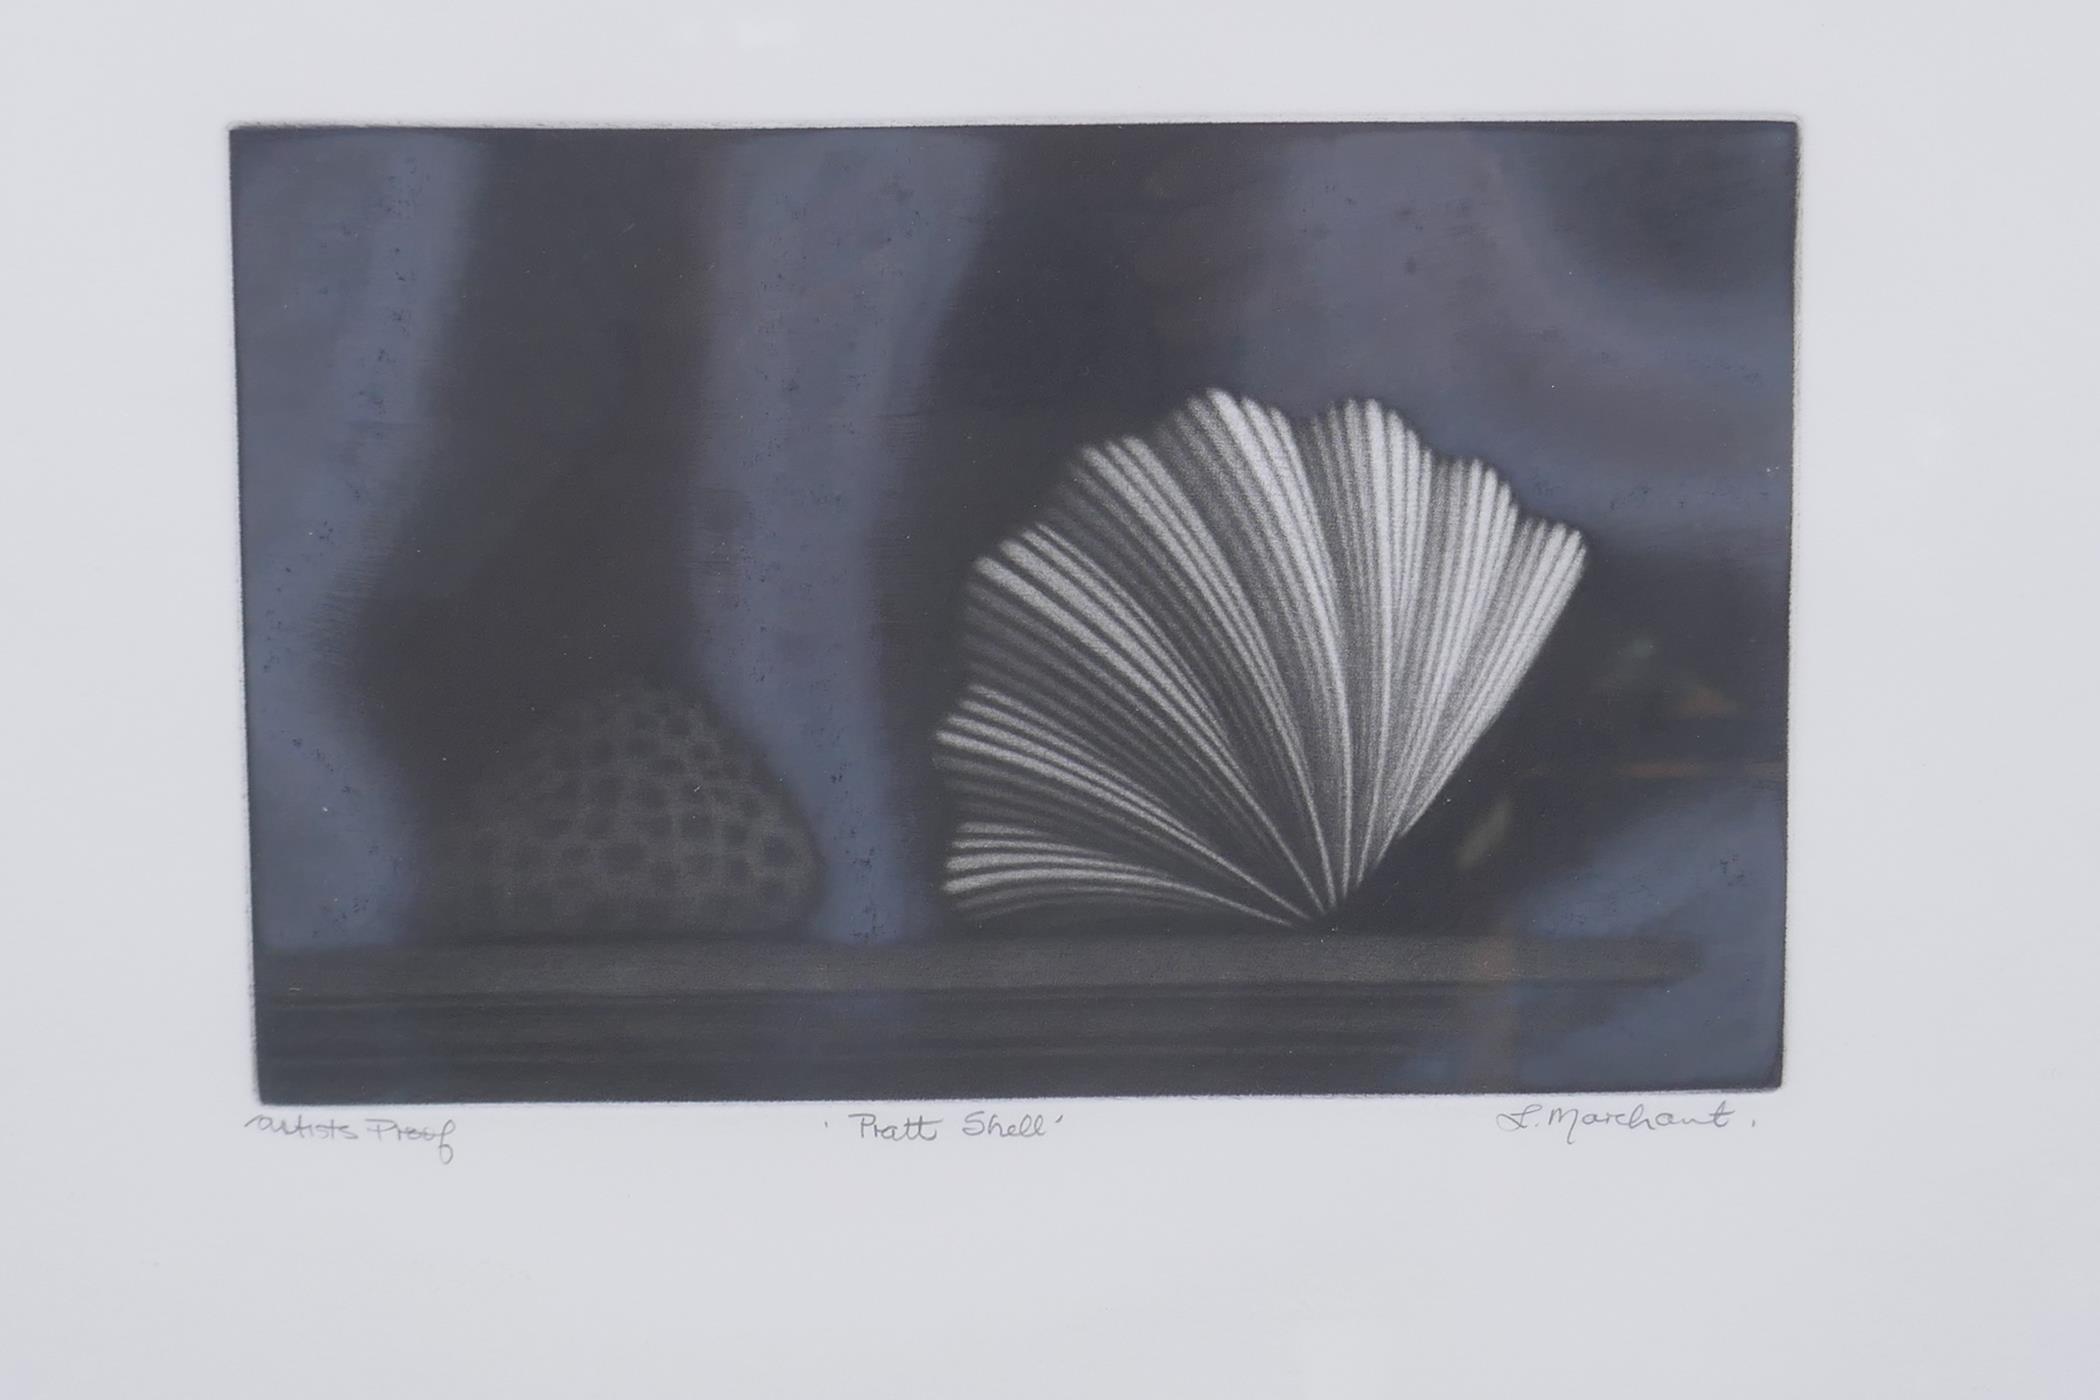 Leonard Marchant, (South African, 1929-2000), Pratt Shell, artist's proof mezzotint, circa 1975, - Image 2 of 7